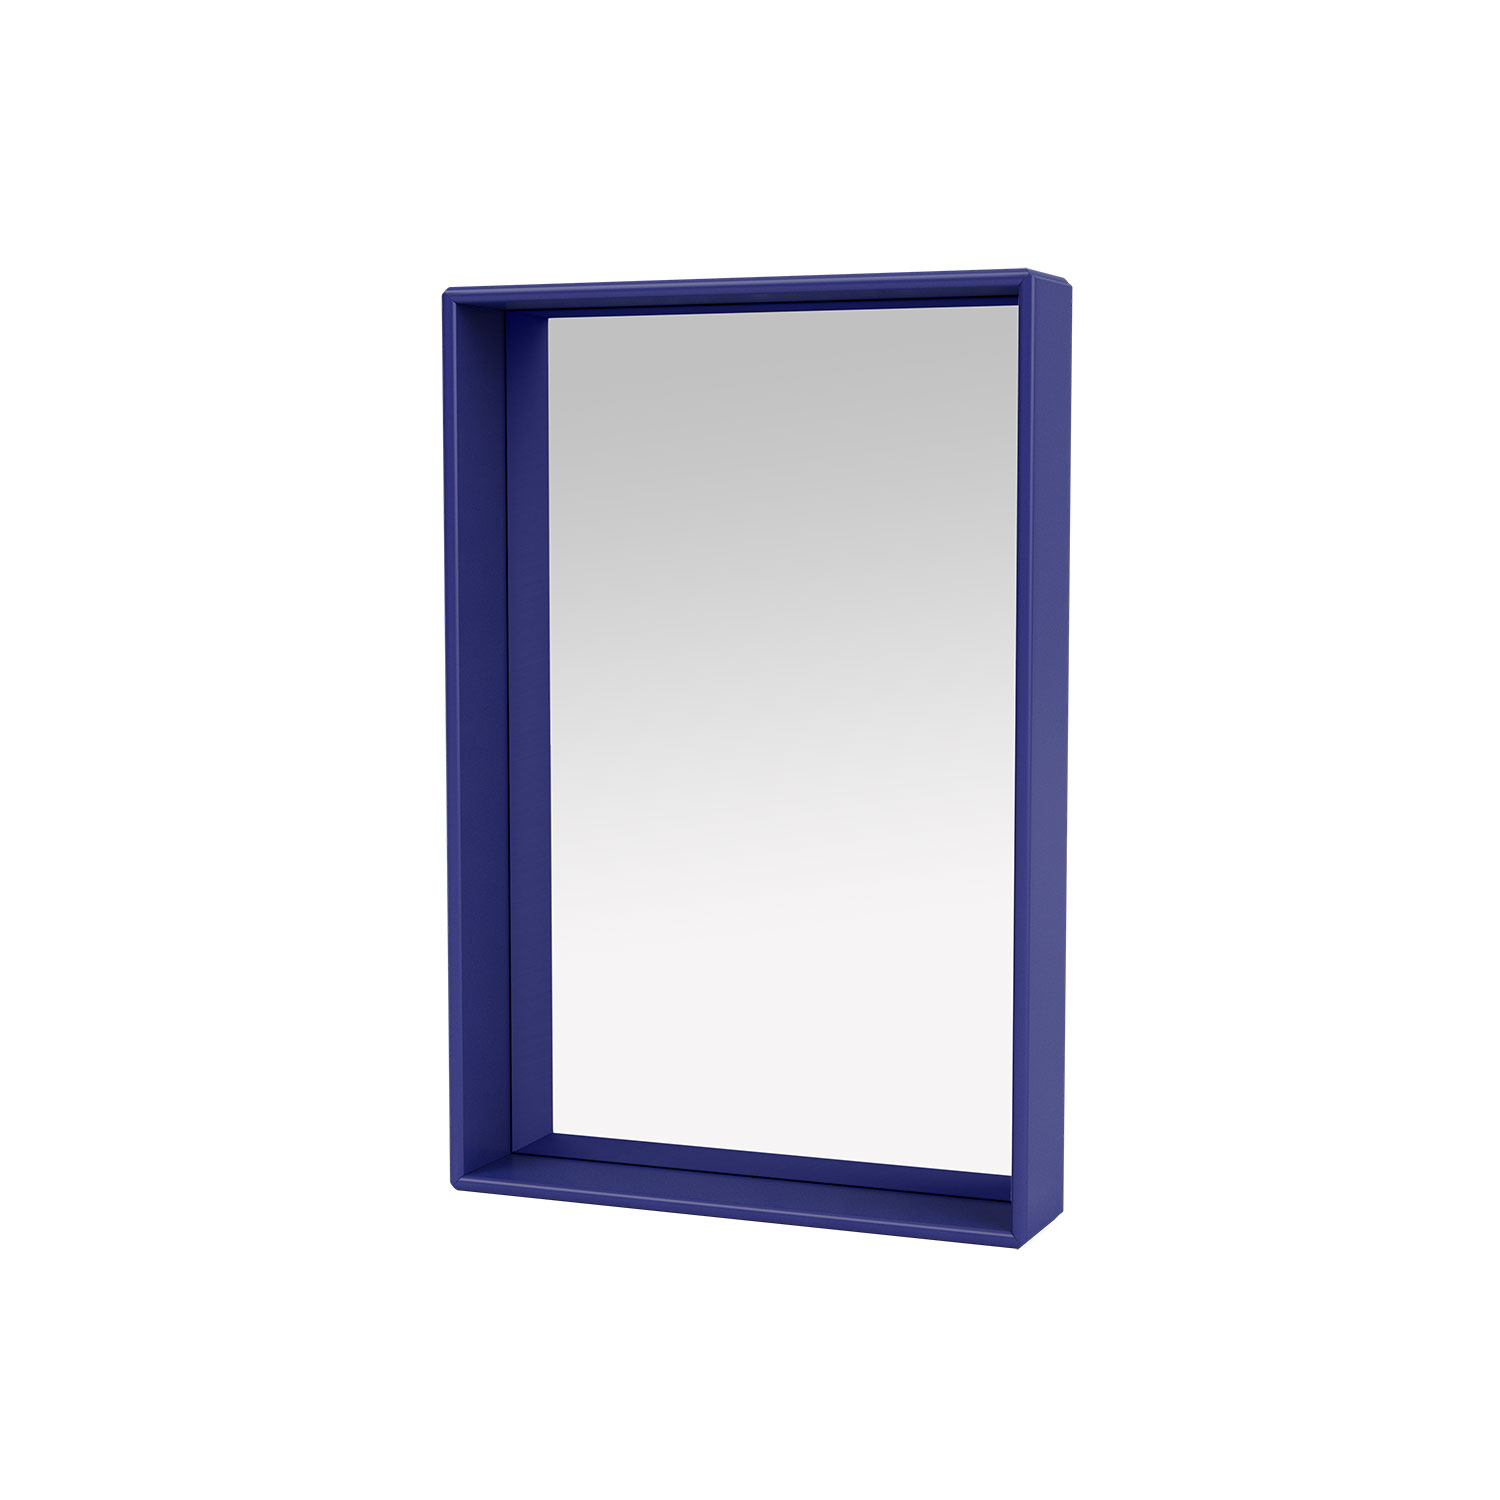 SHELFIE mirror with shelf, 5 colors